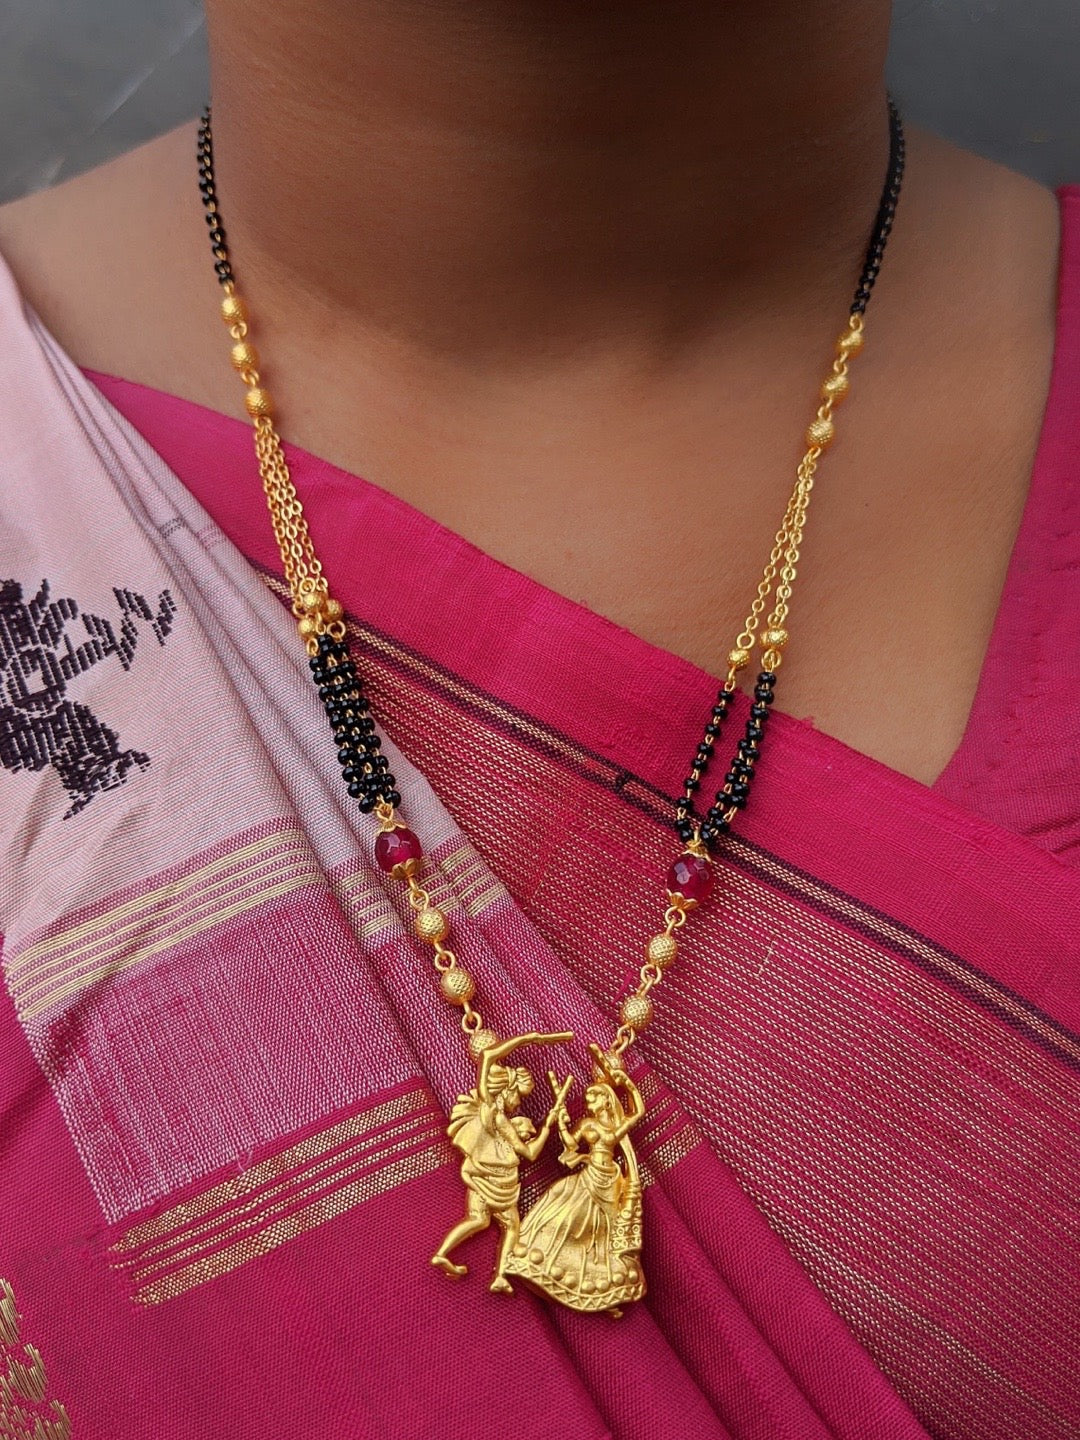 image for Short Mangalsutra Designs dancing dandiya navratri special gold mangalsutra black beads chain